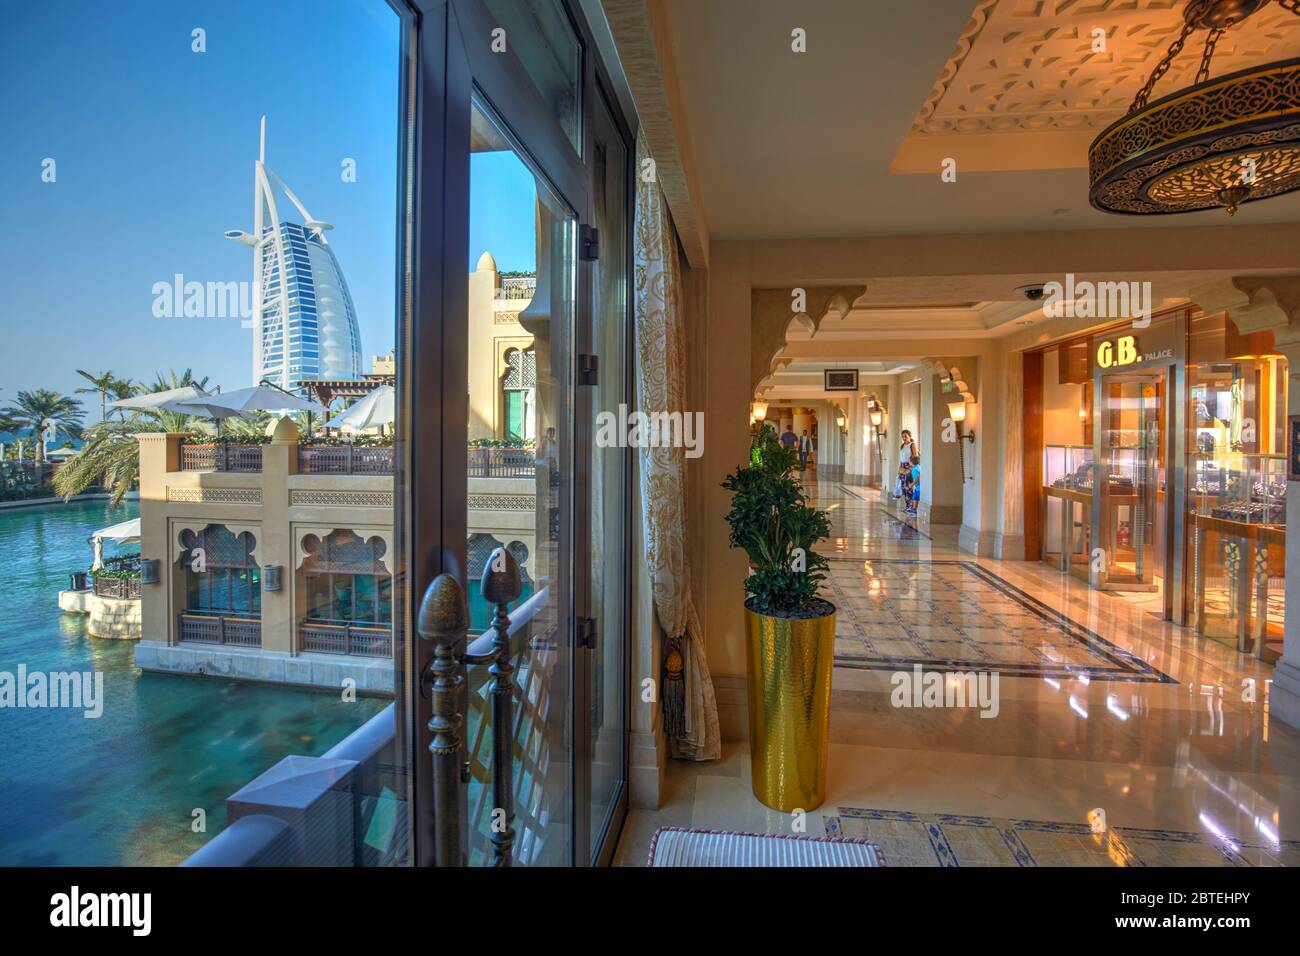 Al Arab hotel in Jumeirah, Dubai, United Arab Emirates Stock Photo